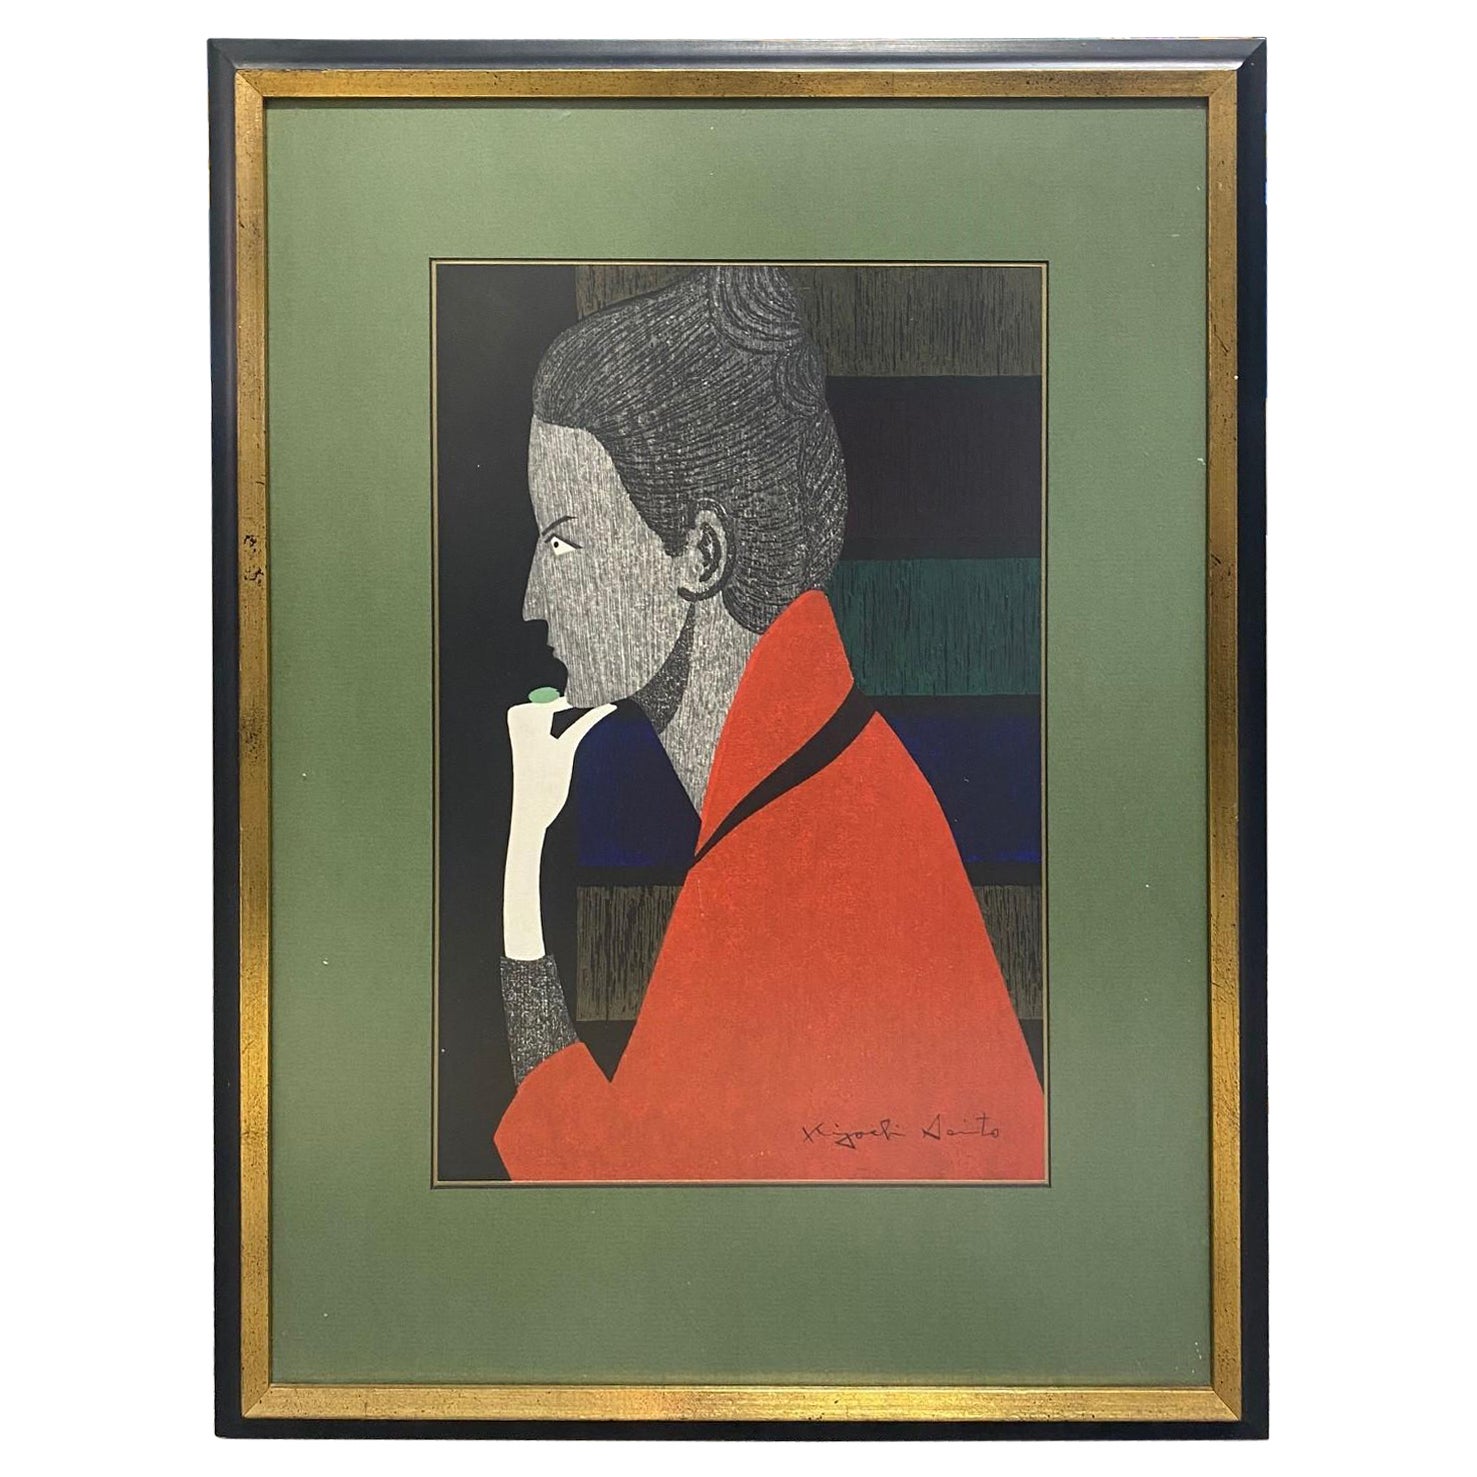 Kiyoshi Saito Signed Japanese Print Shop Girl Cardin Paris 'Green Ring' 1960